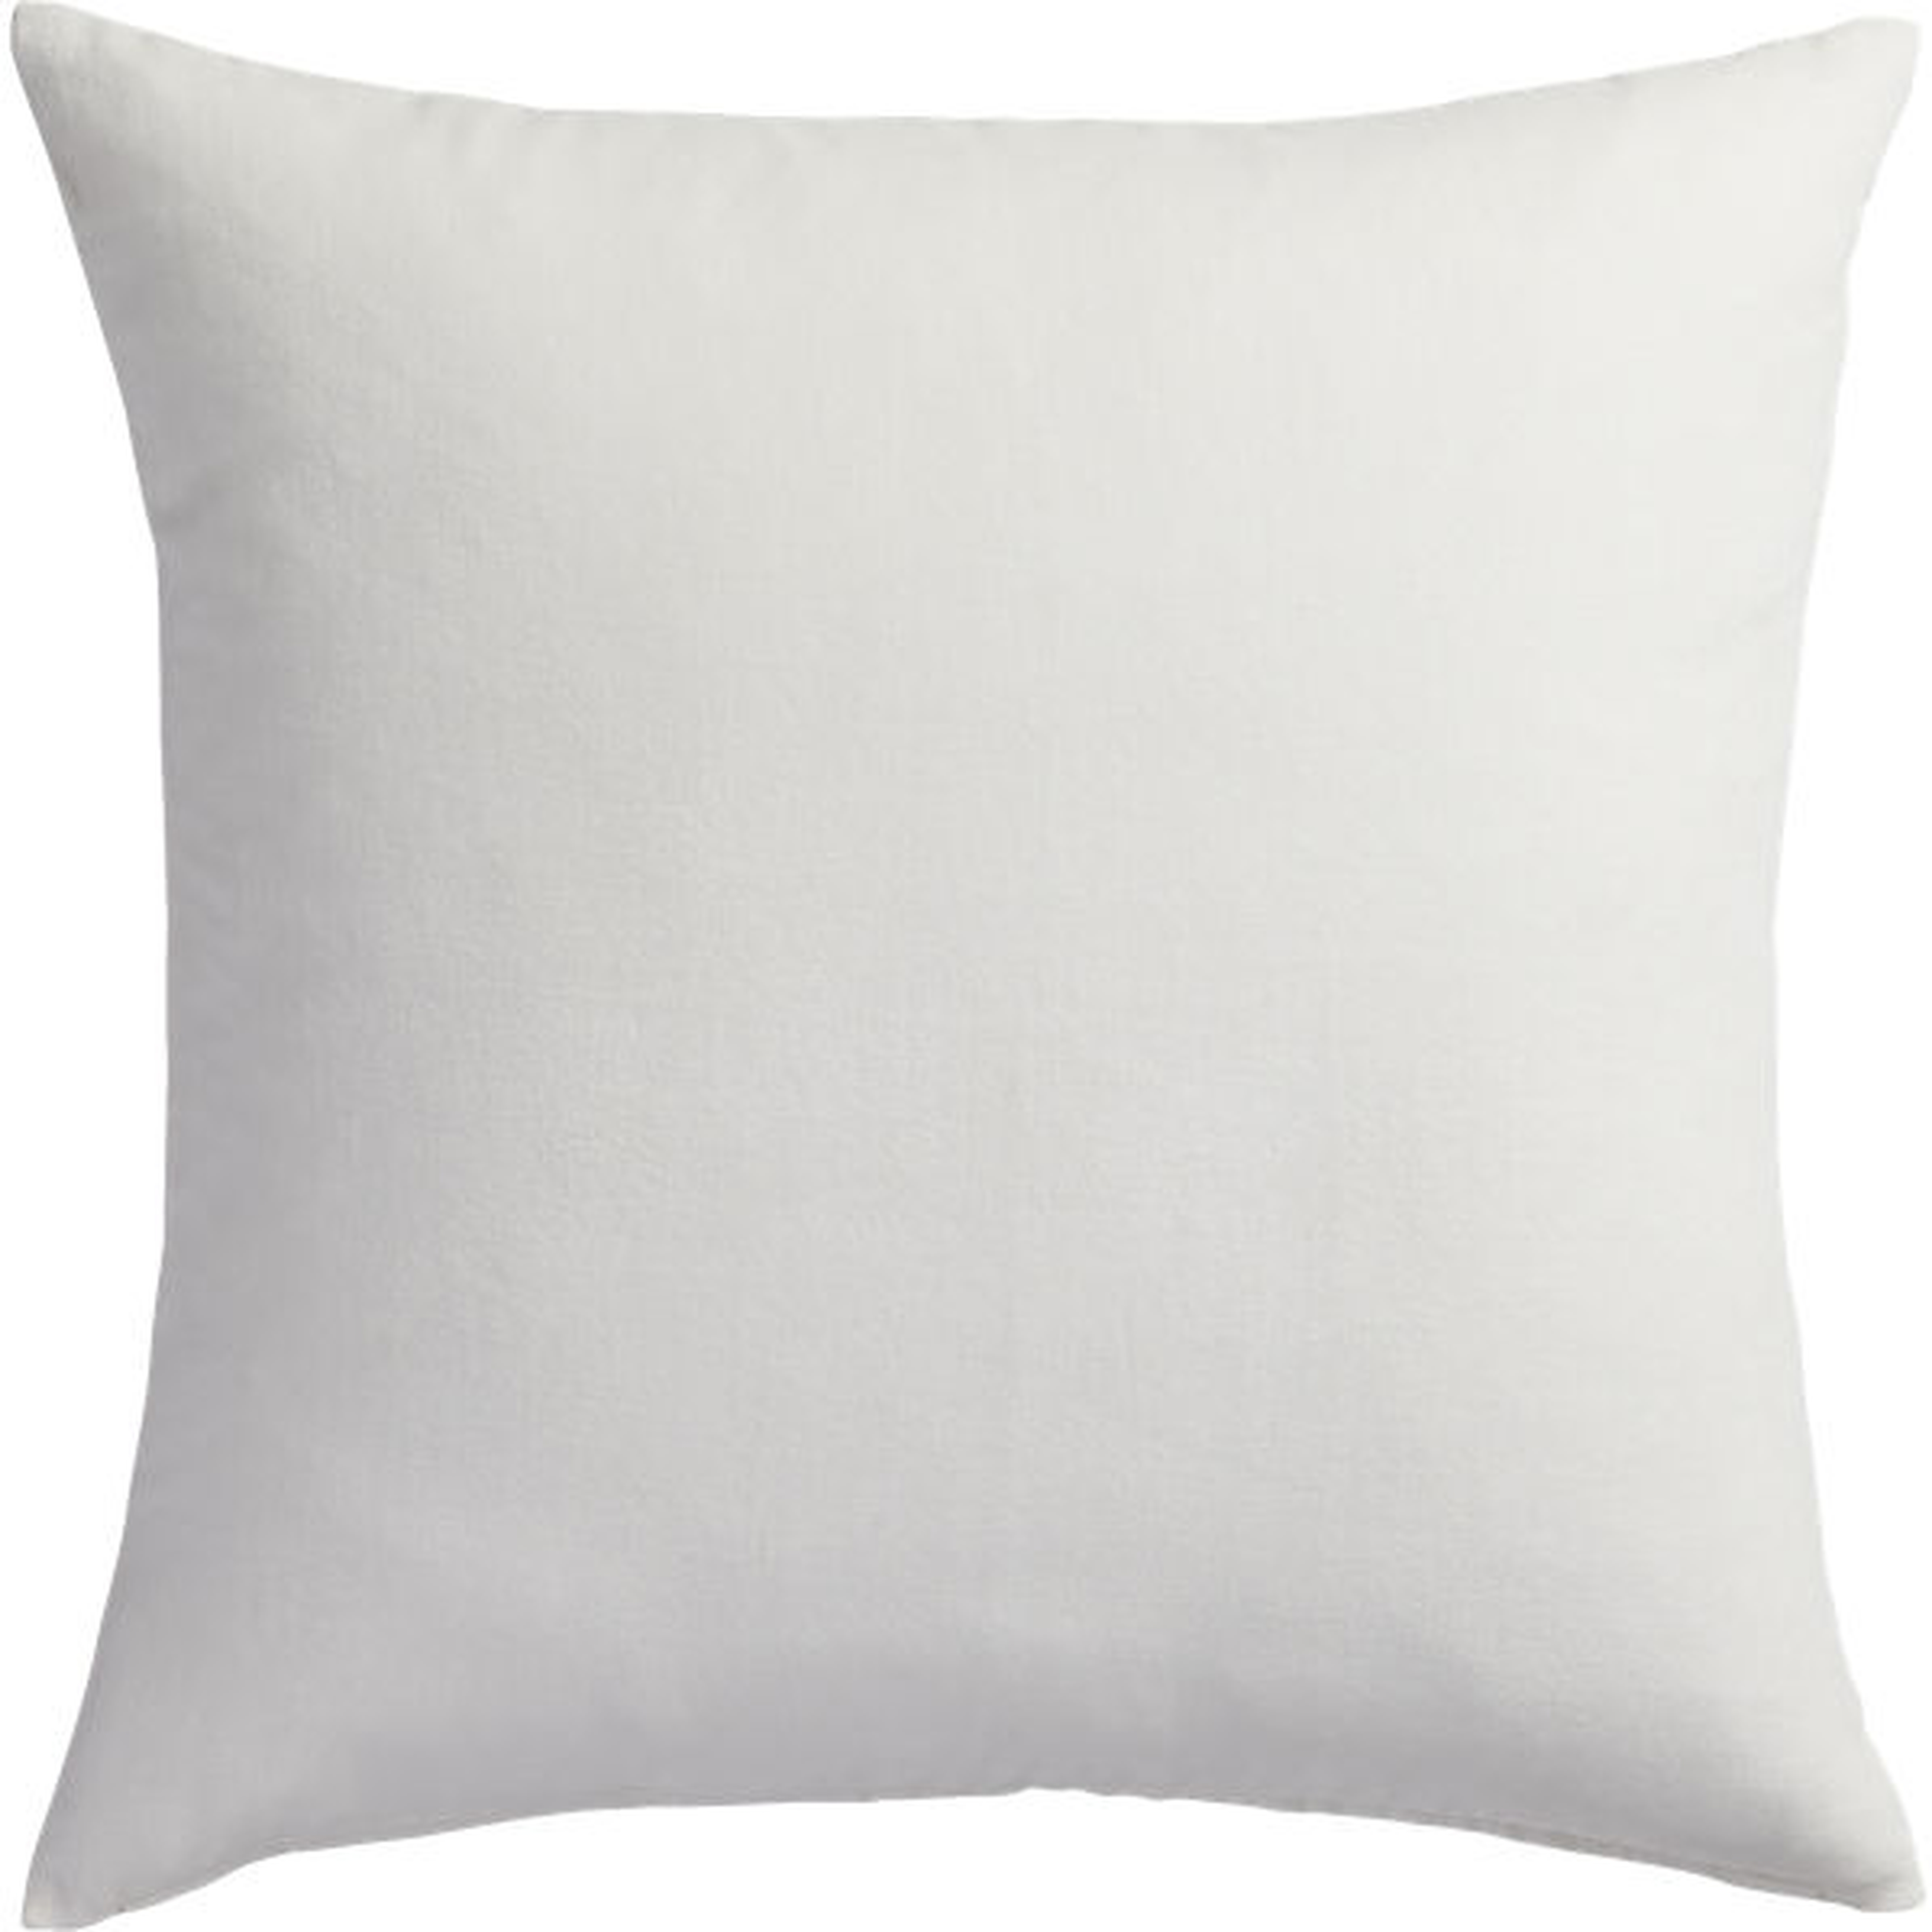 leisure white pillow -23"- down  alt Insert included - CB2